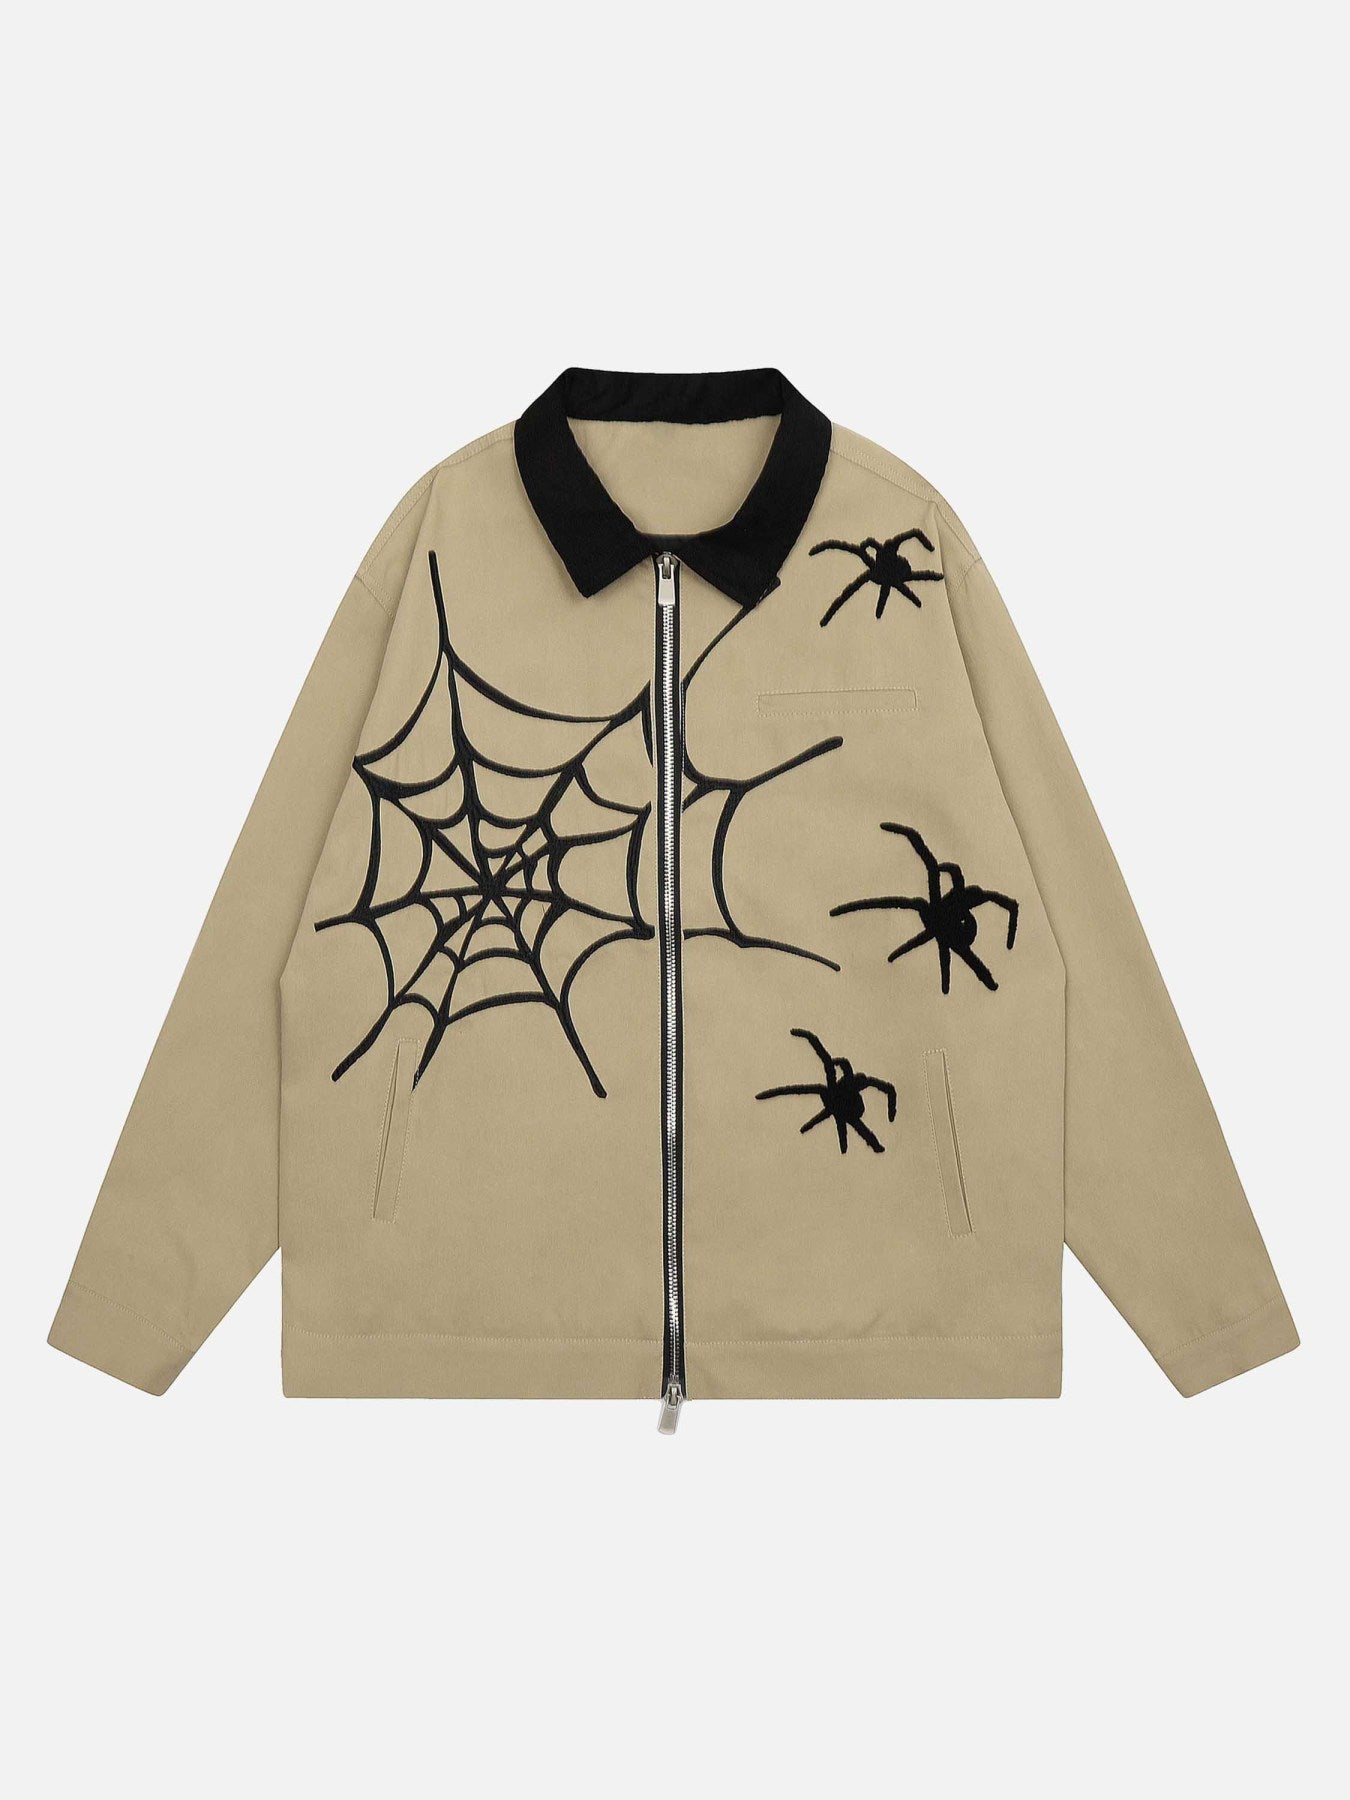 Thesupermade Large Spider Web Embroidered Denim Jacket - 1827